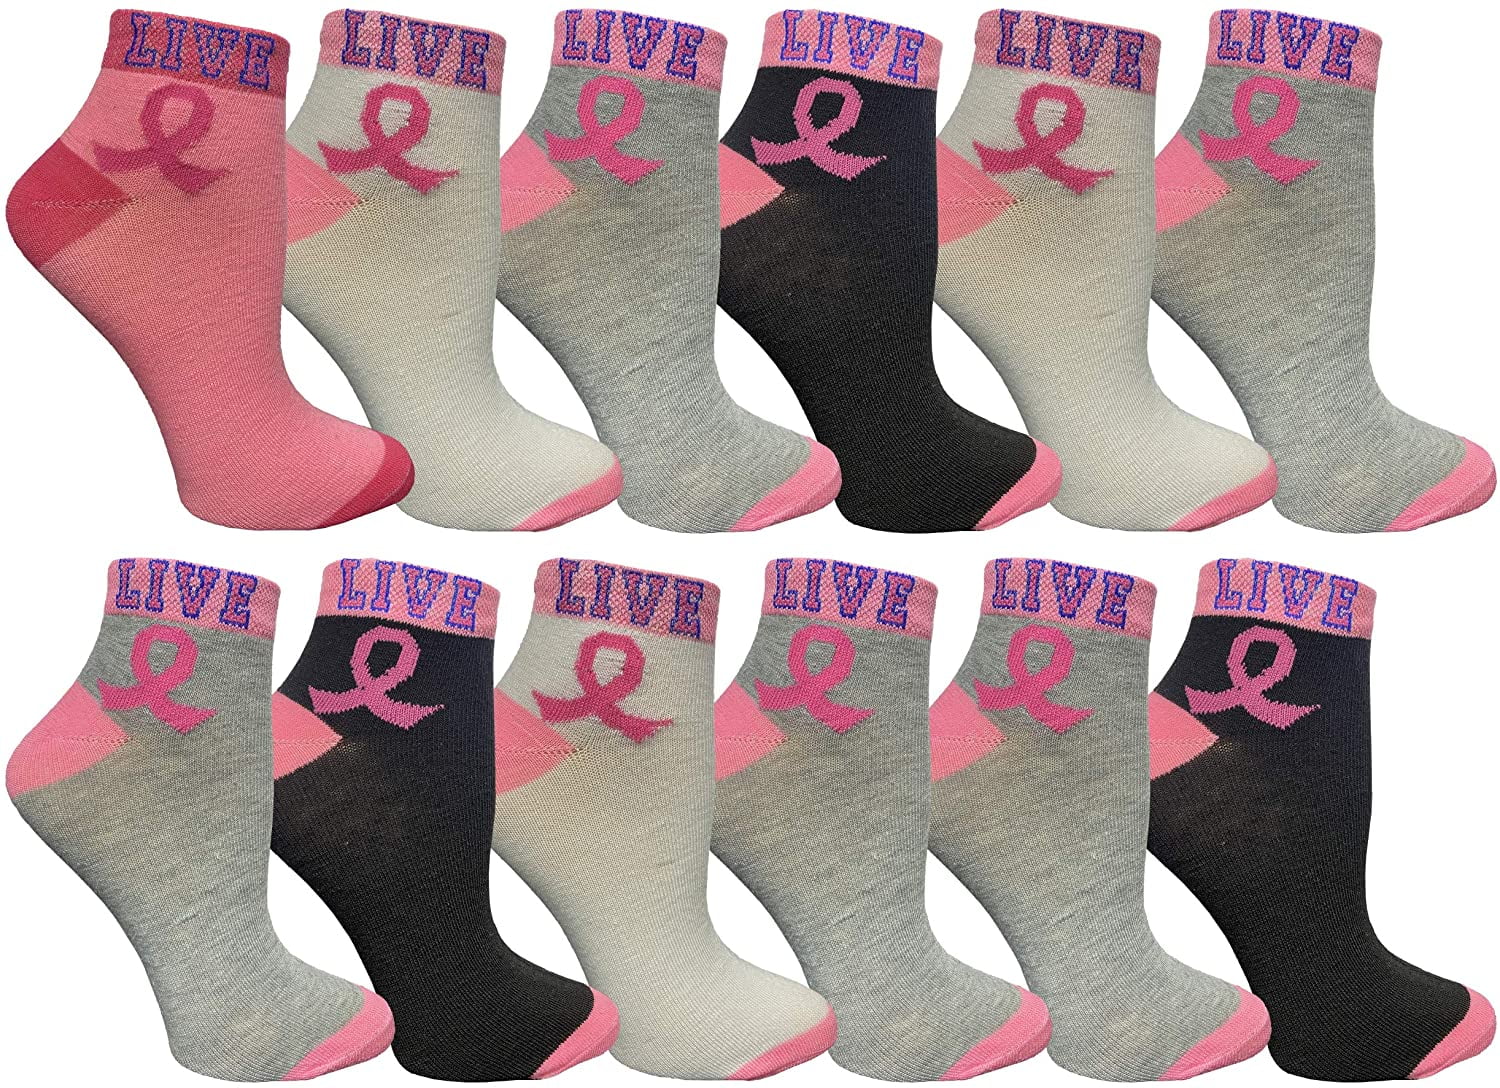 Breast Cancer Awareness Socks Ladies 3 Pairs Black Pink Striped Solid Gray Black 